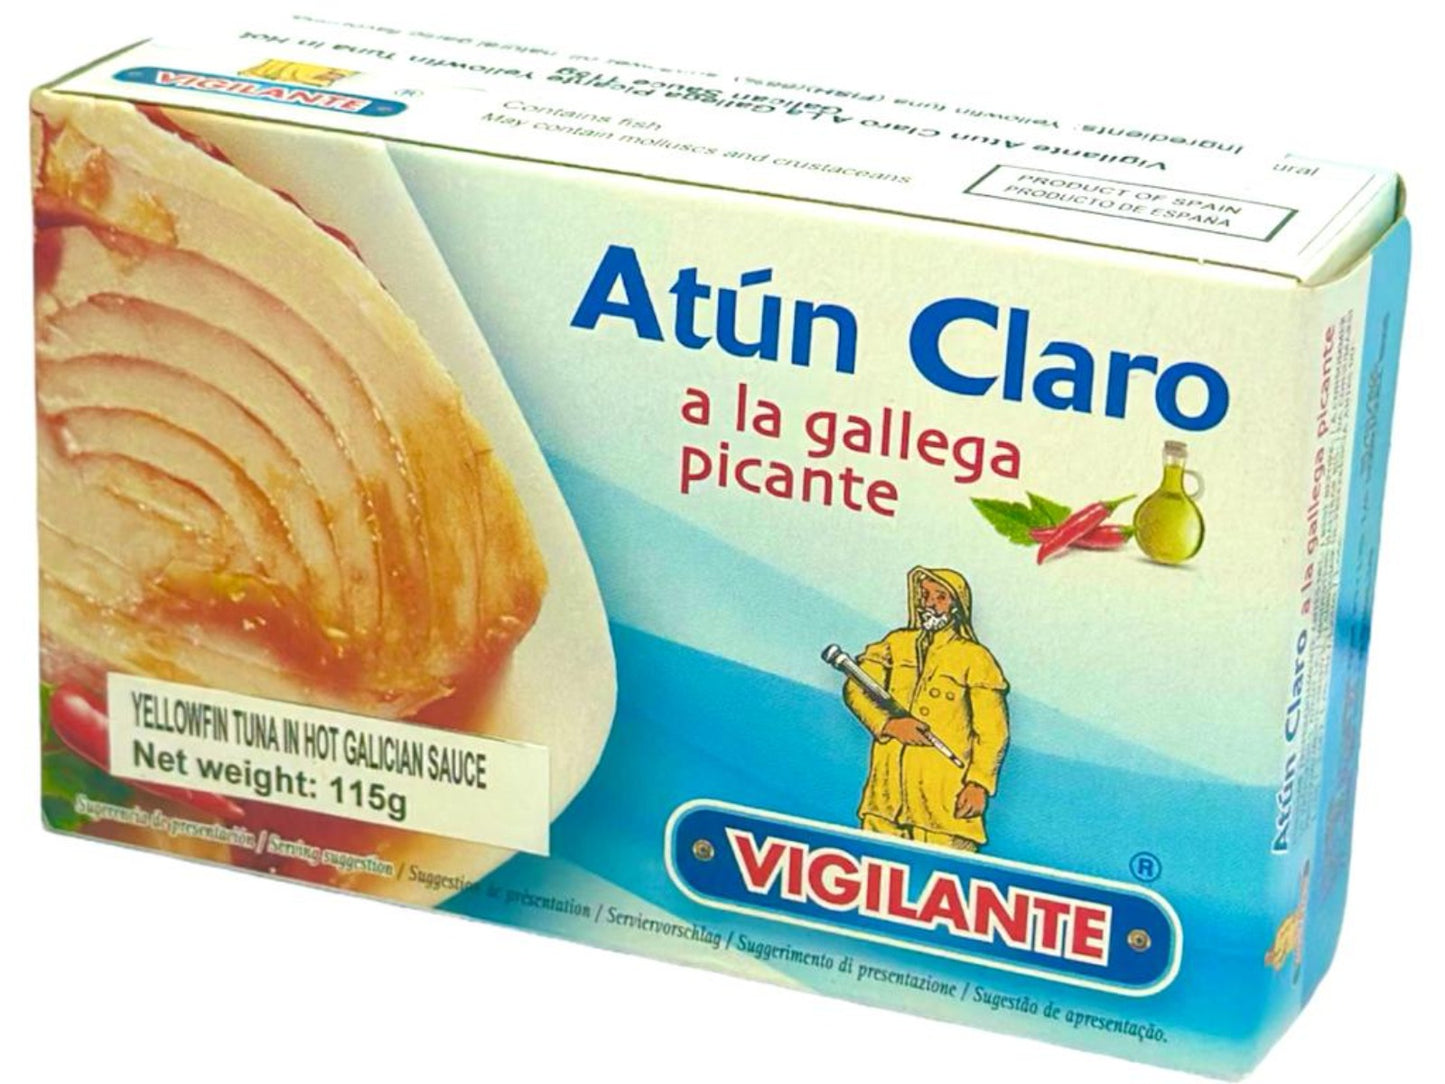 Vigilante Atun Claro a la Gallega Picante Spain - Yellowfin Tuna in Hot Galican Sauce 115g